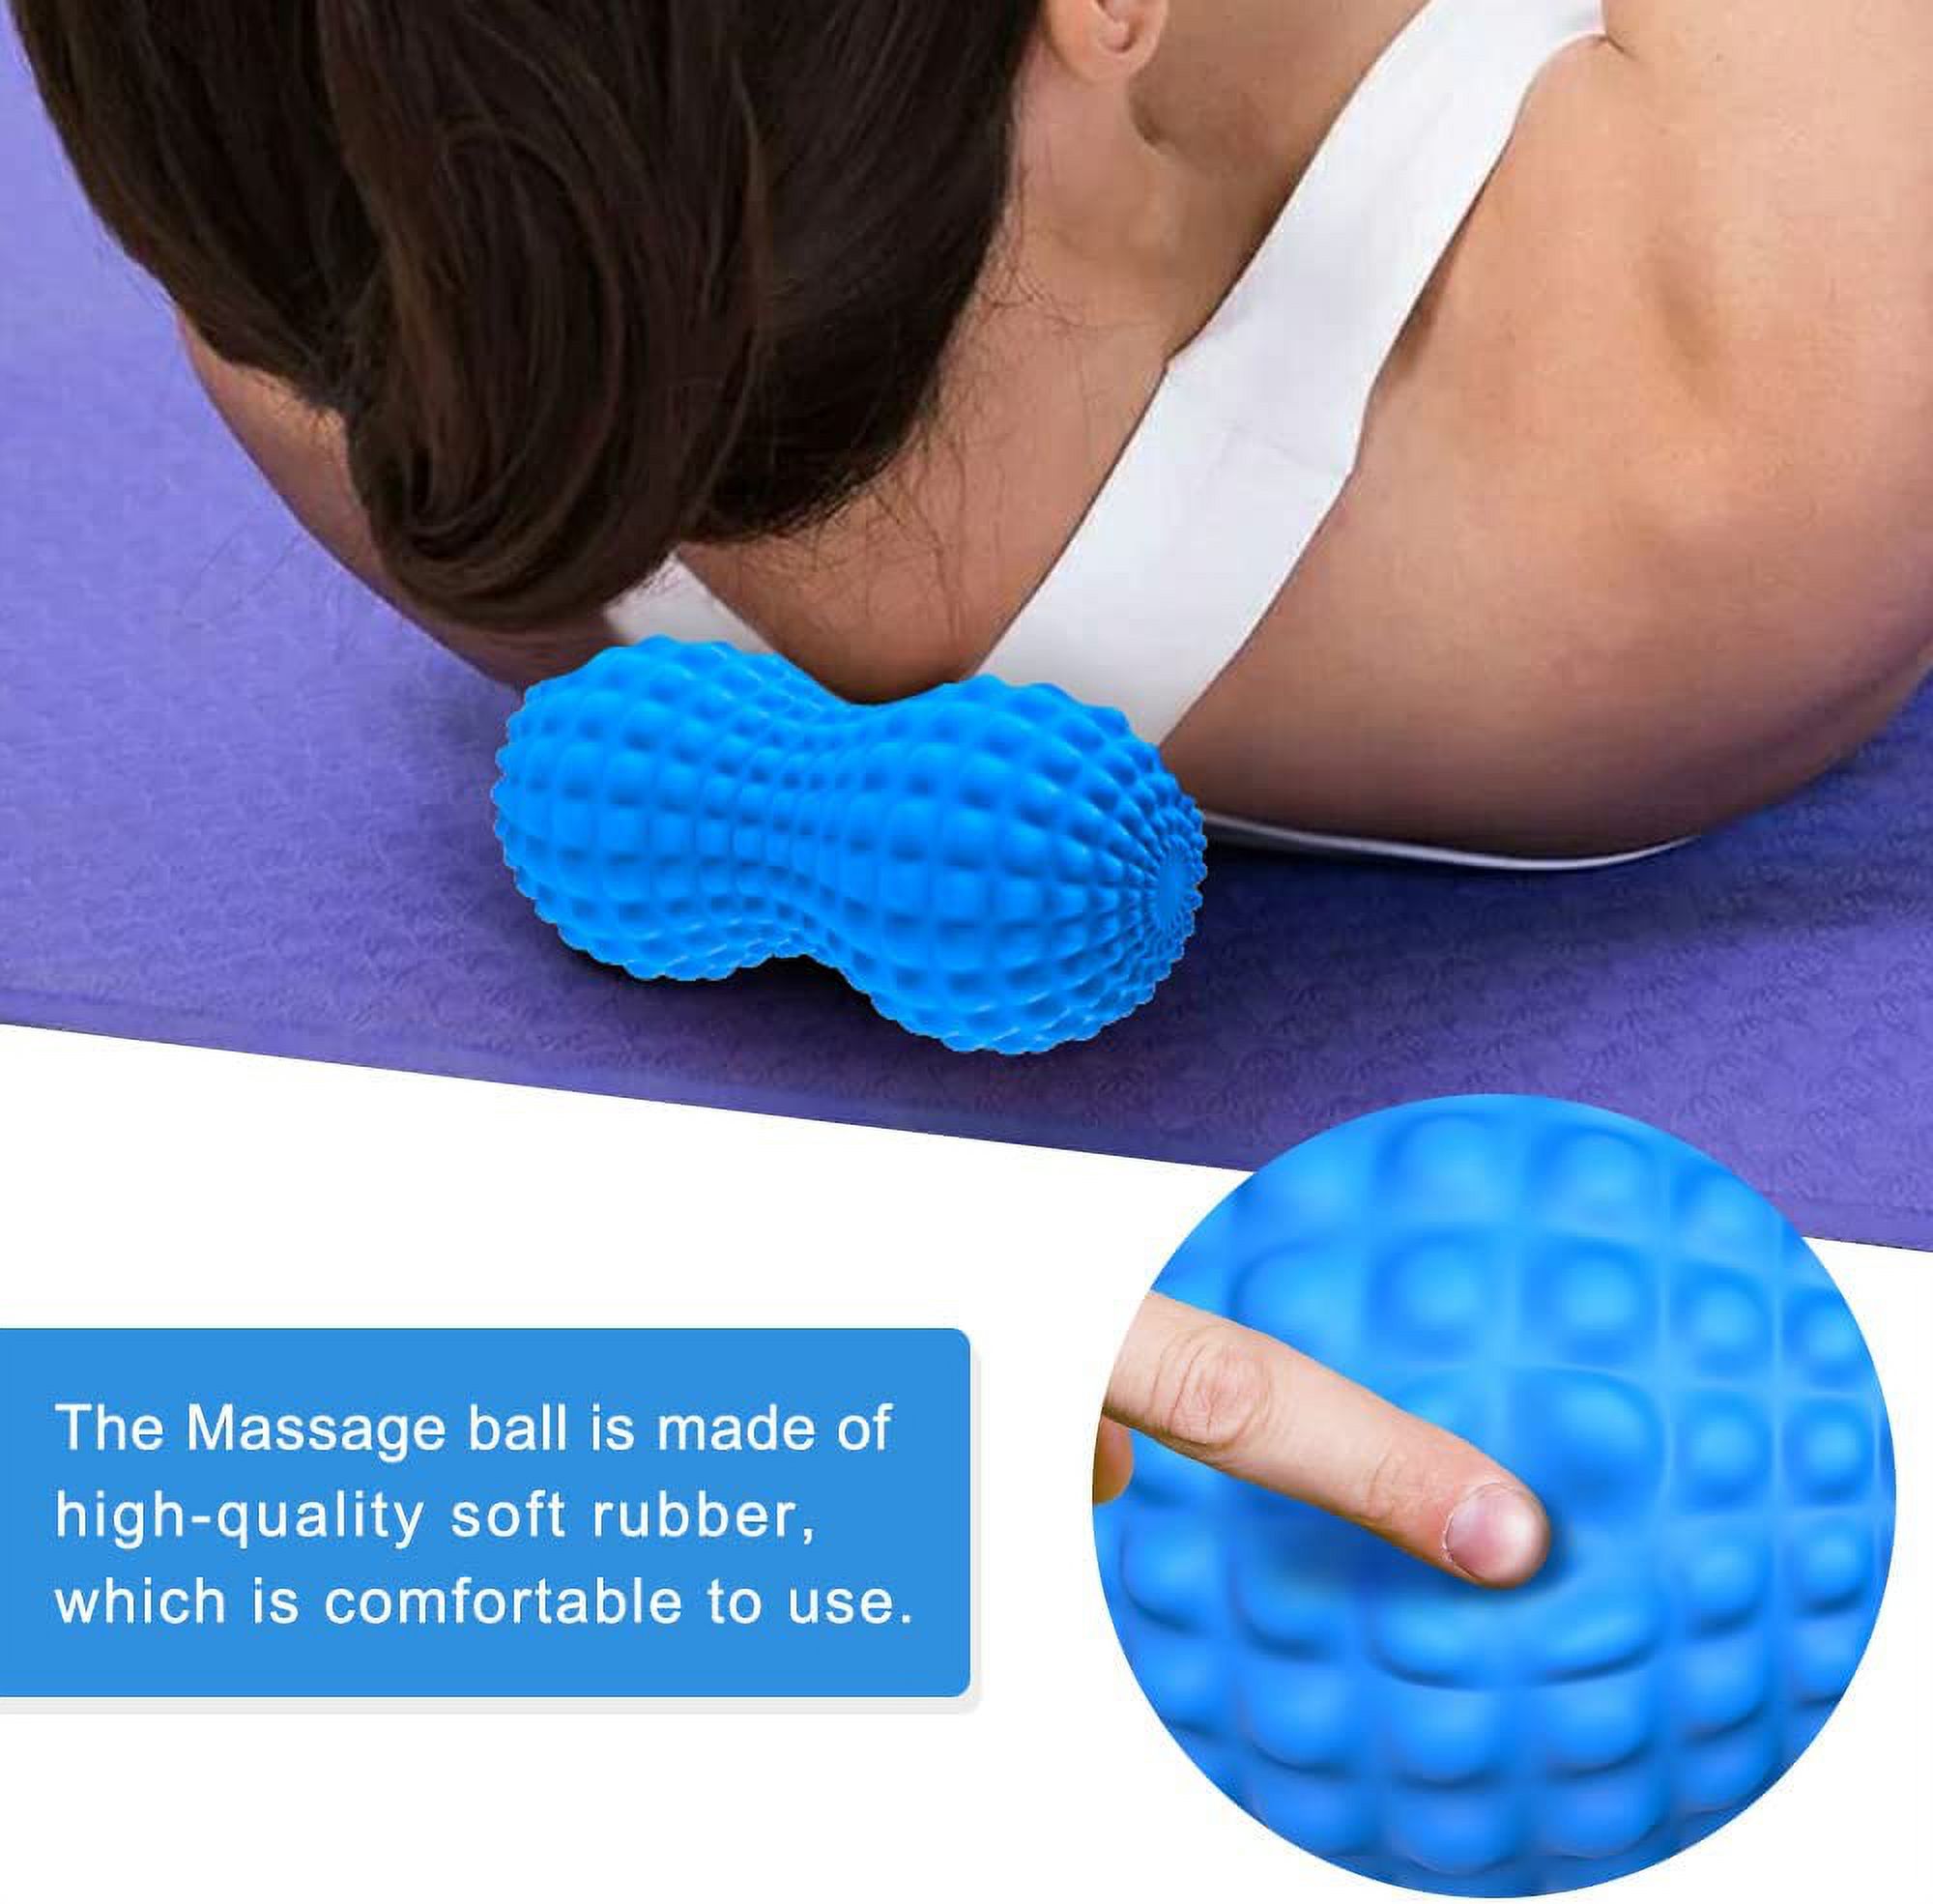 Peanut Massage Ball, Double Lacrosse Massage Roller Balls, Deep Tissue Massage Ball for Back, Neck, Shoulder, Spine, Legs, Hips, Peanut Roller Trigger Point Muscle Massage Relaxer (Blue) - image 2 of 5